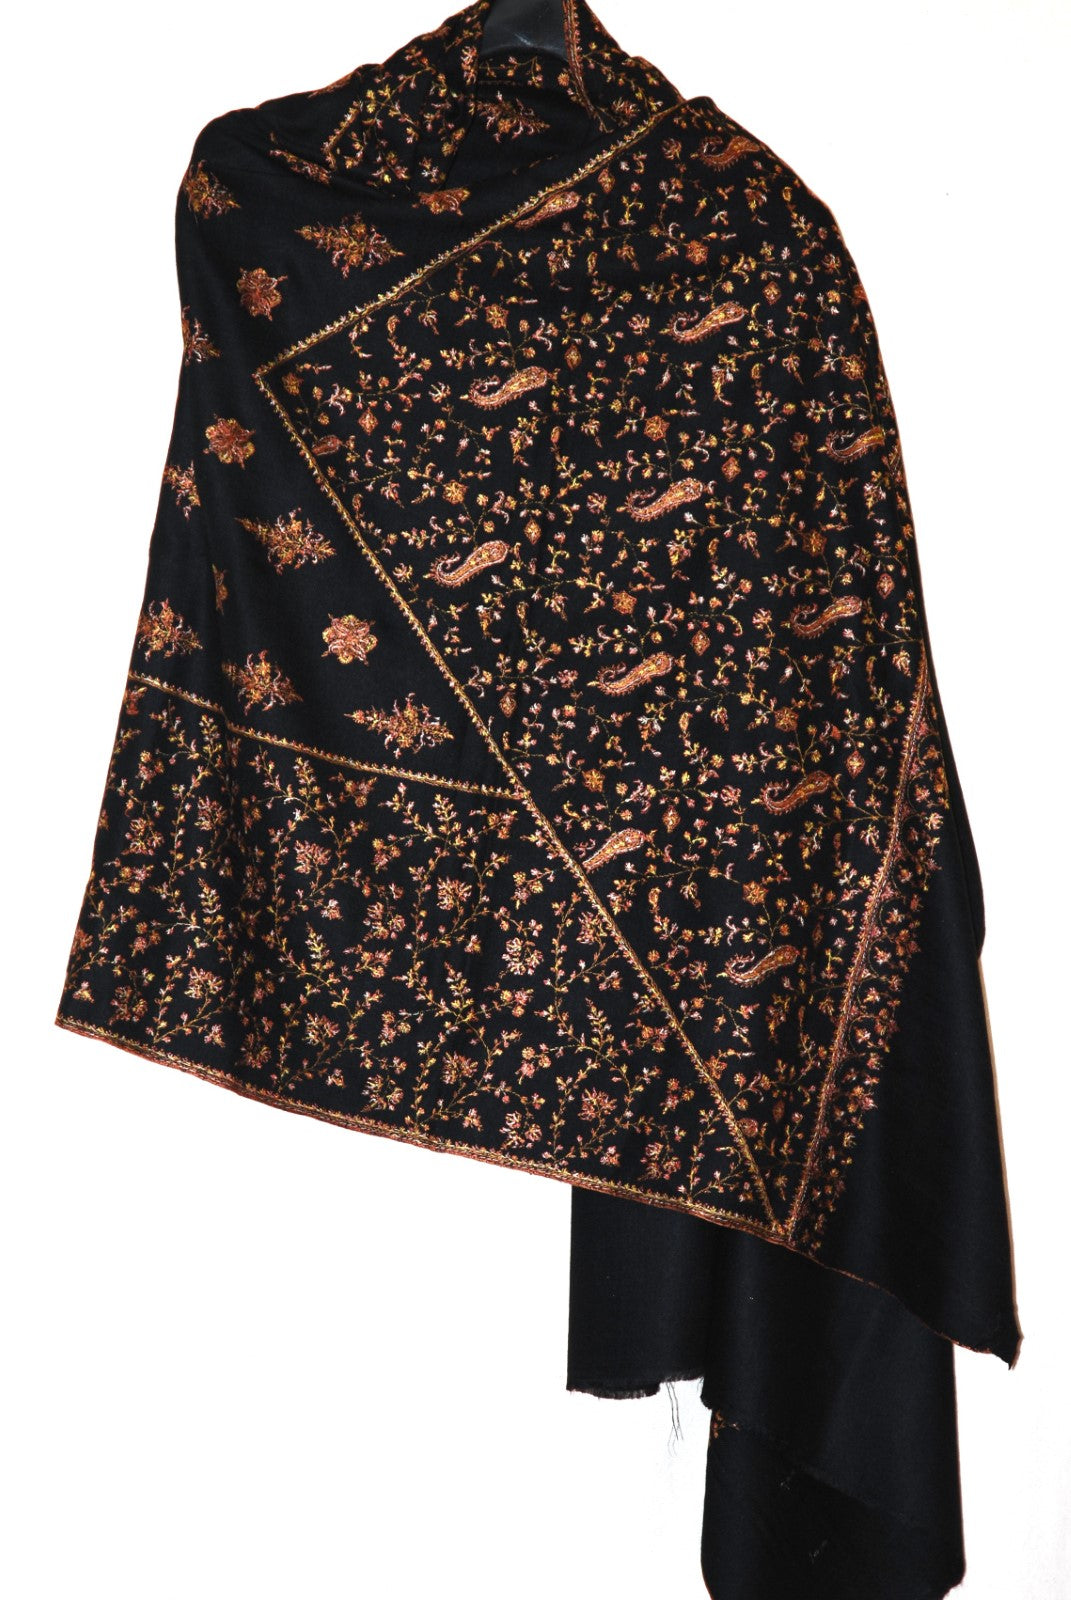 Kashmir Pashmina "Sozni" Needlework Embroidered "Cashmere" Shawl Black, Multicolor #PJL-003